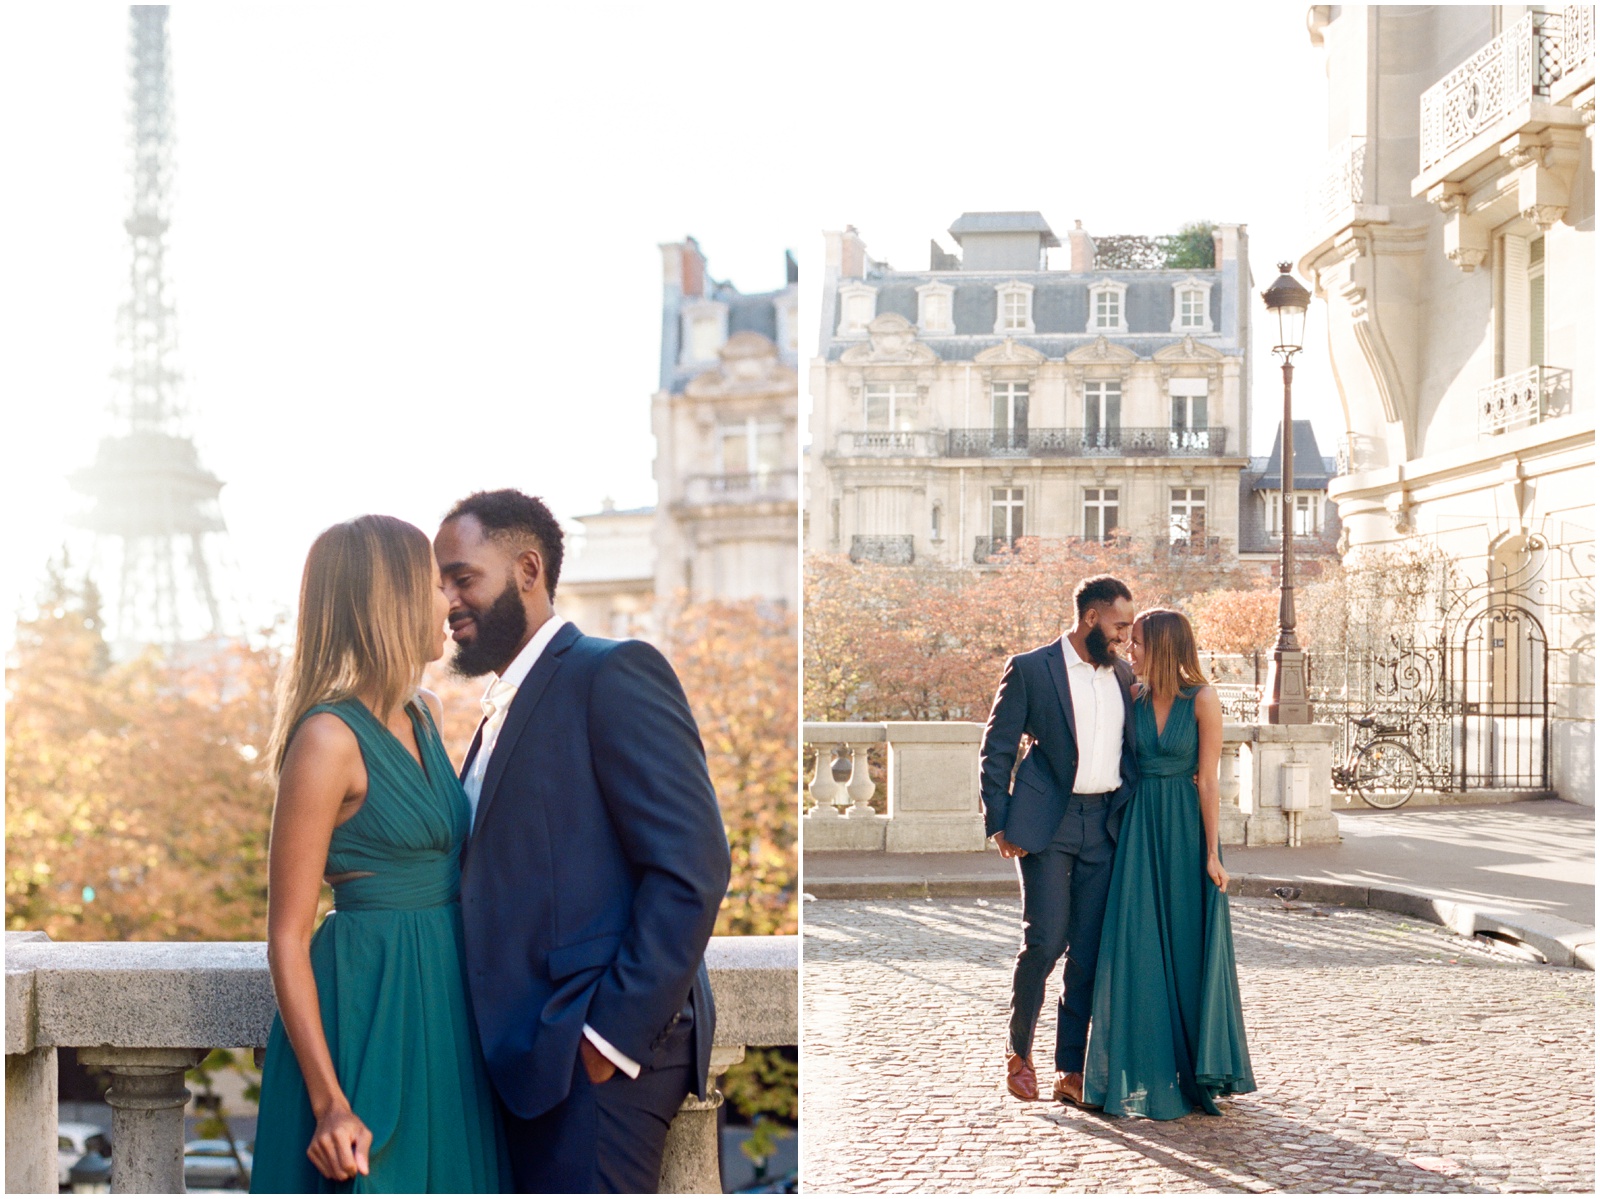 Engagement session in Paris